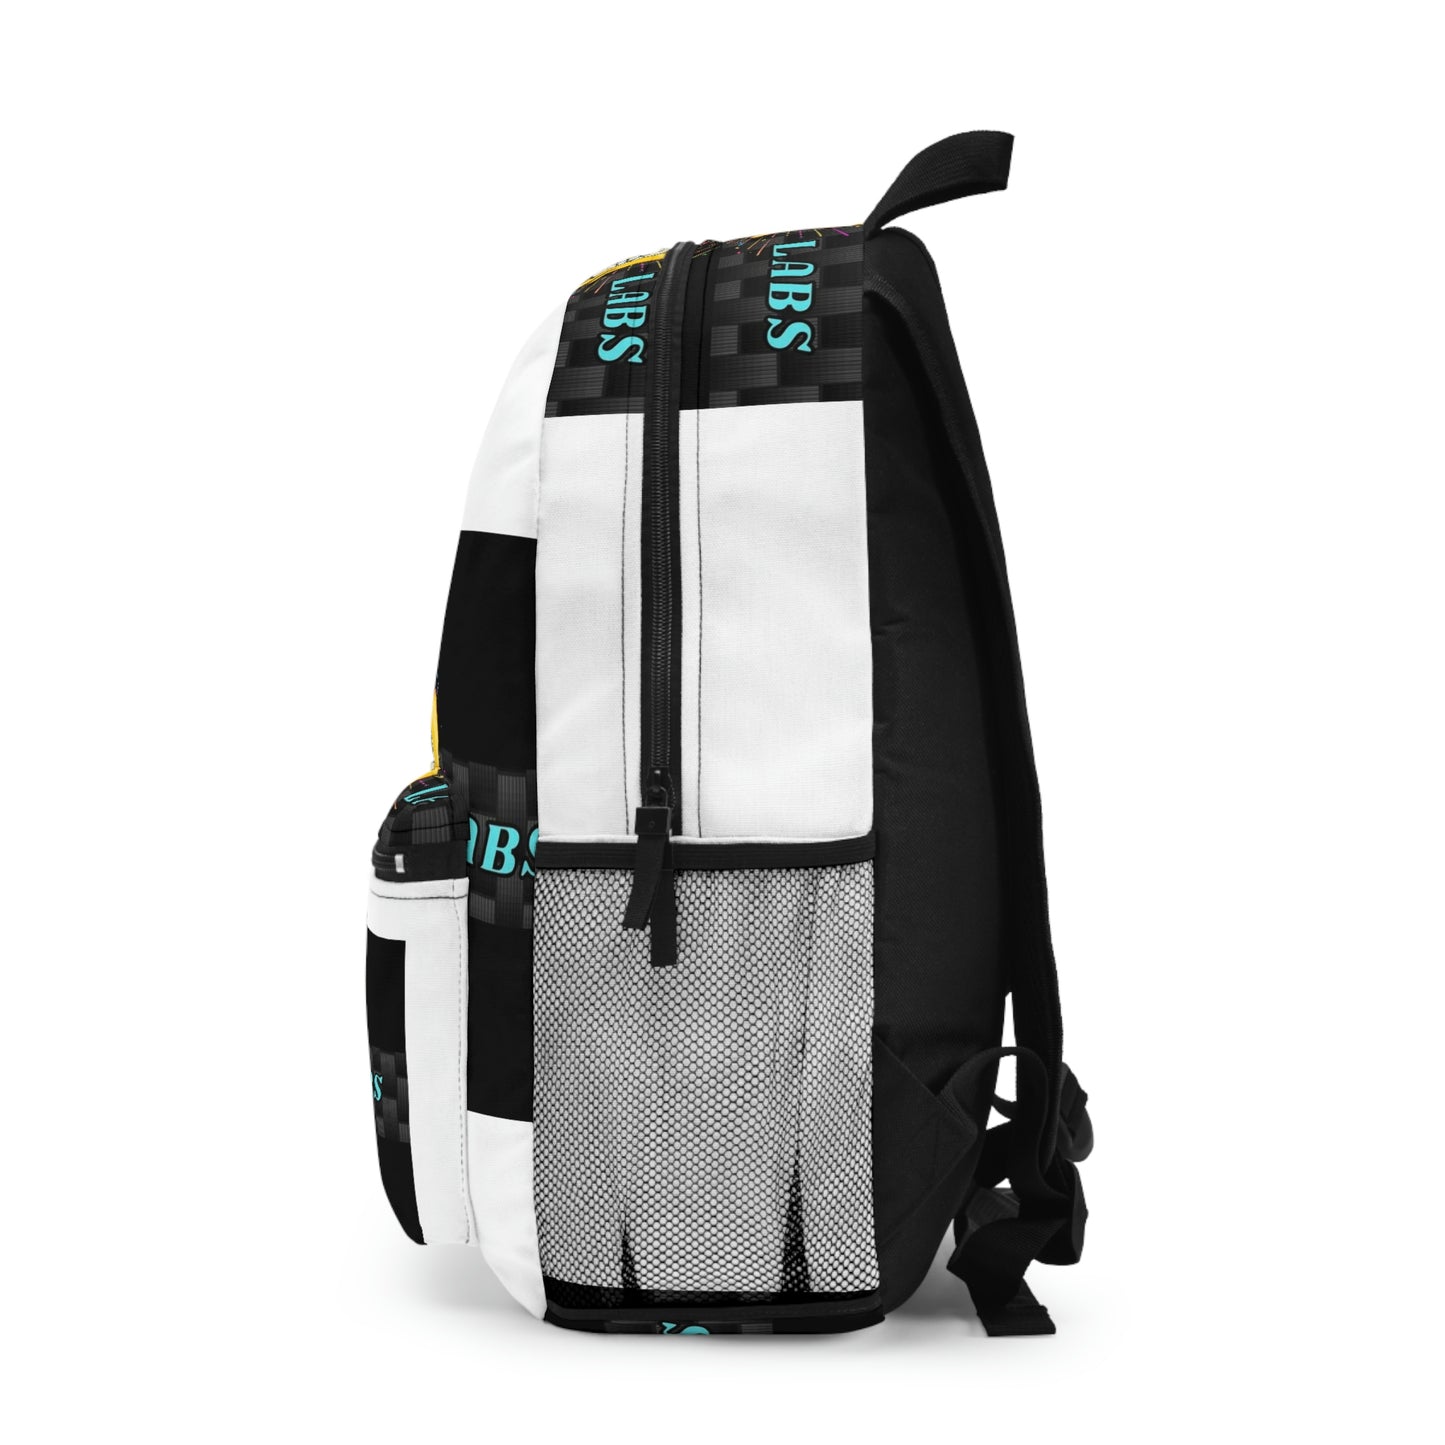 Apeshitlabs Backpack